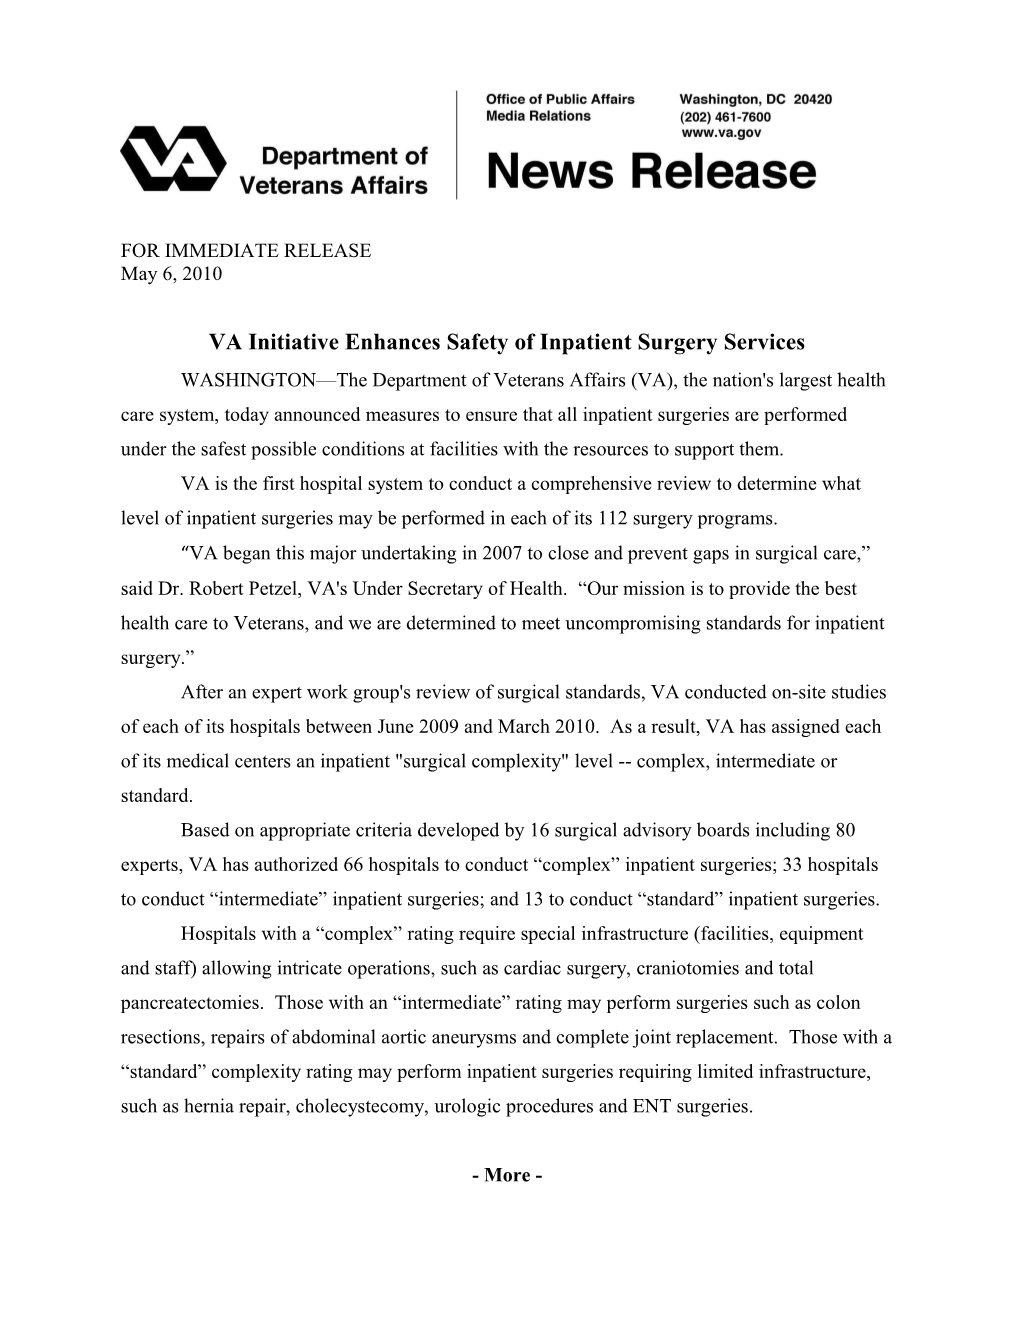 VA Initiative Enhances Safety of Inpatient Surgery Services